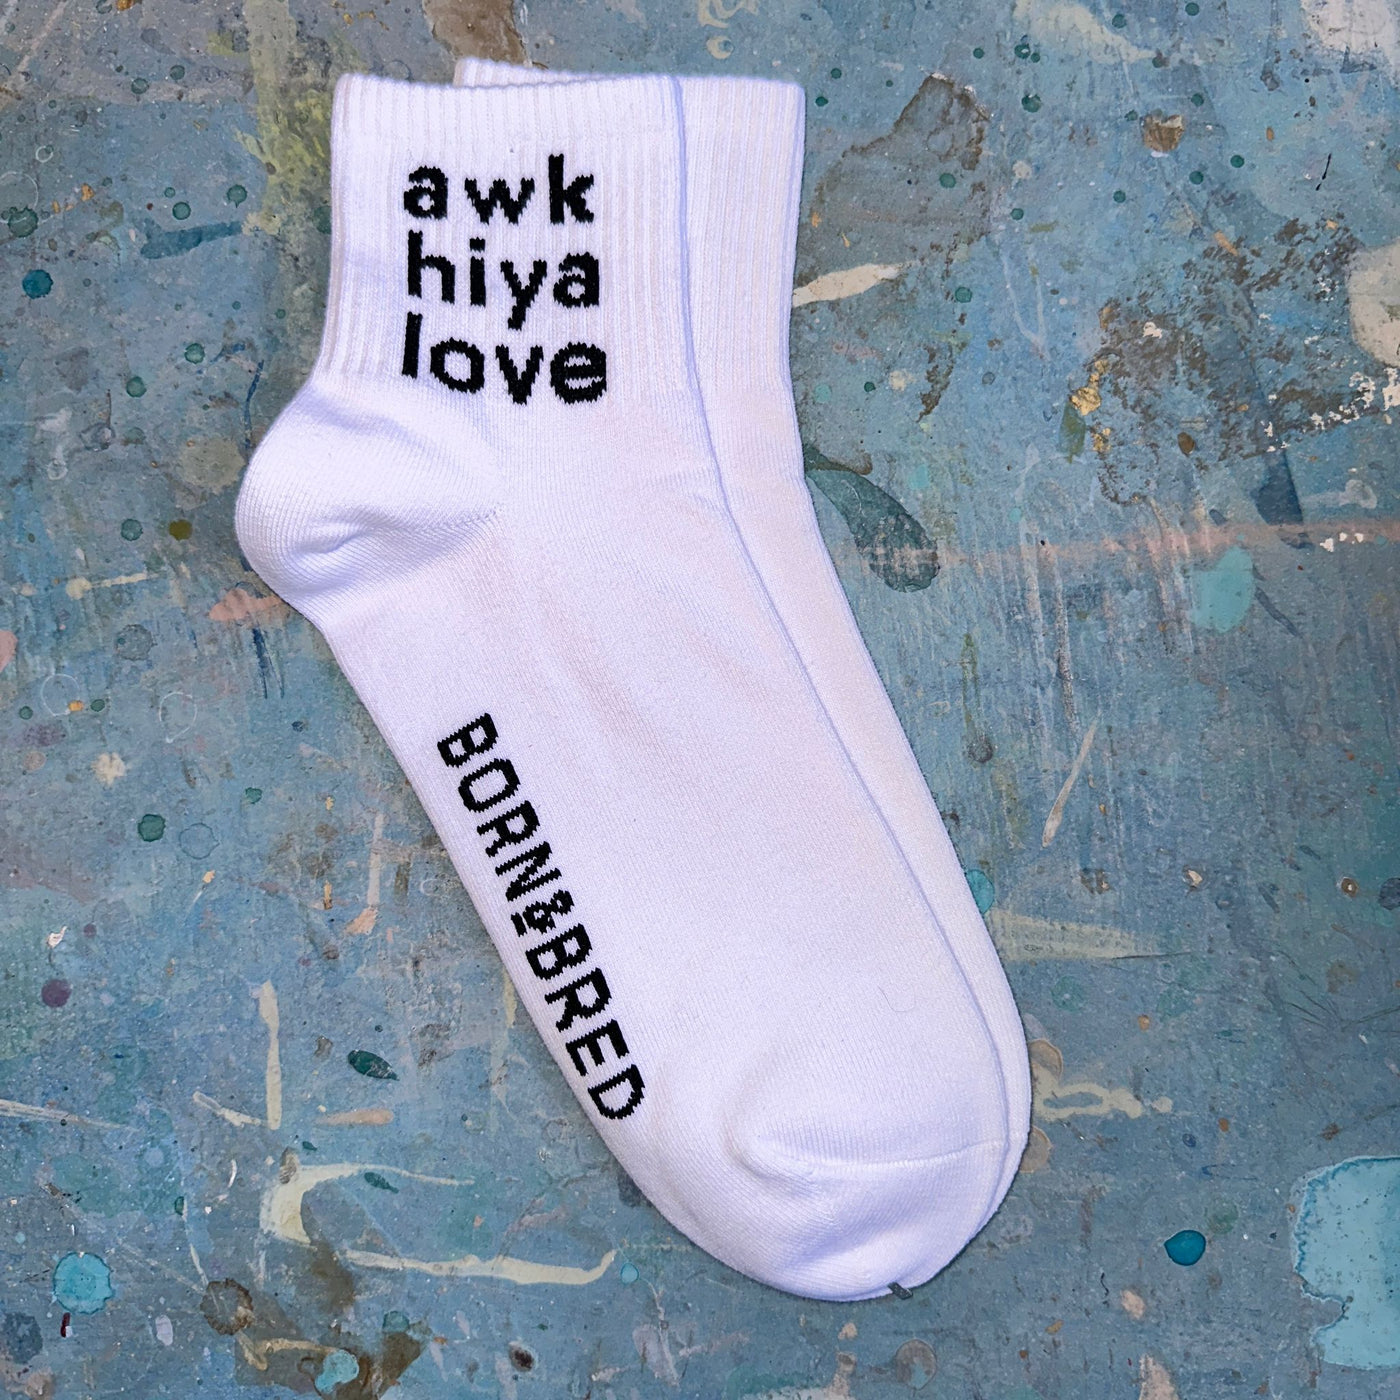 awk hiya love white quarter sock